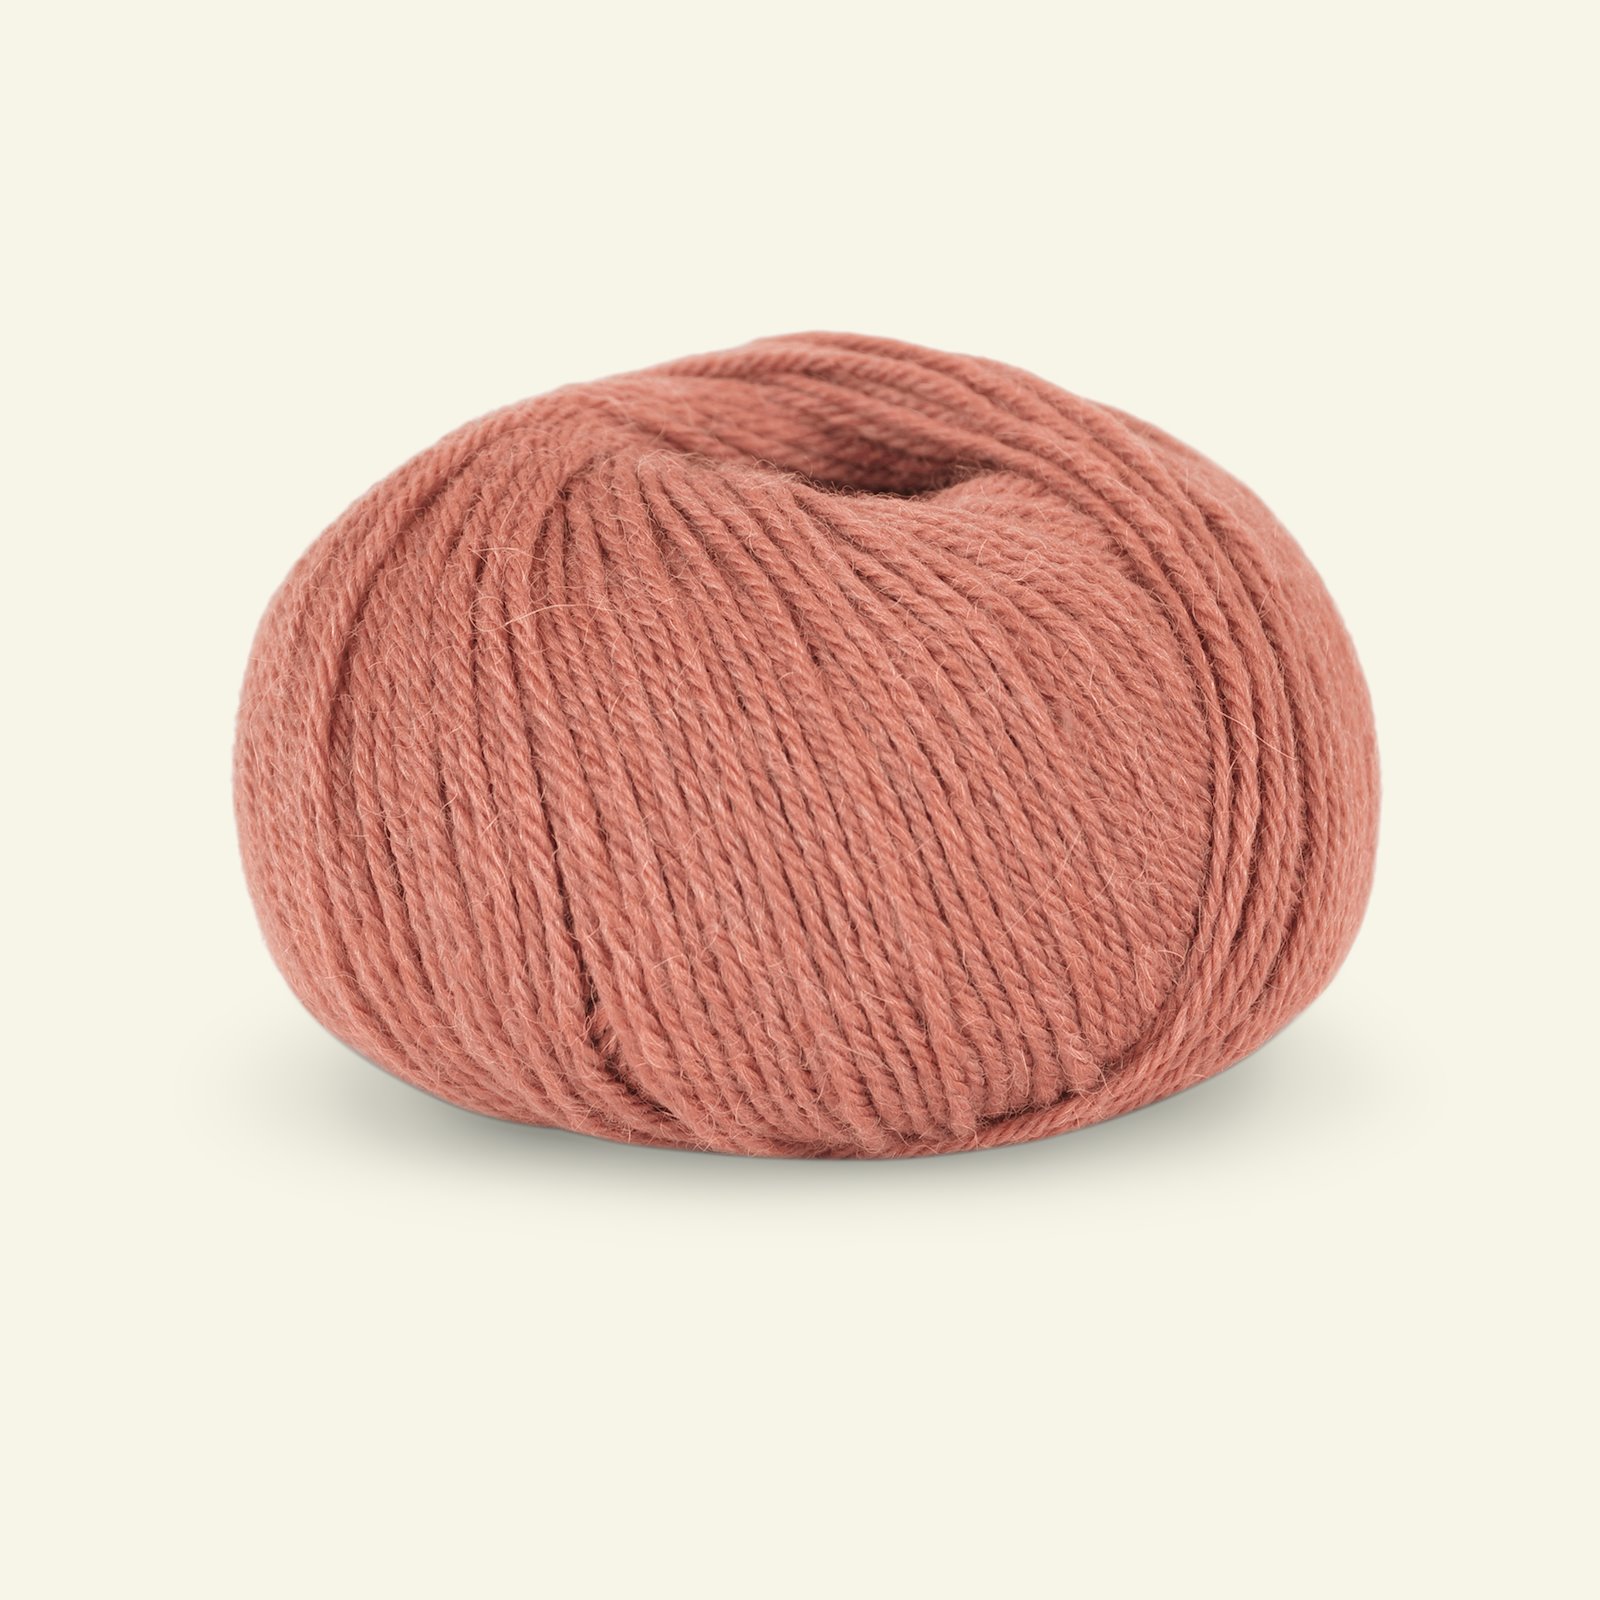 Du Store Alpakka, alpaca merino mixed yarn "Sterk", apricot (898) 90000692_pack_b